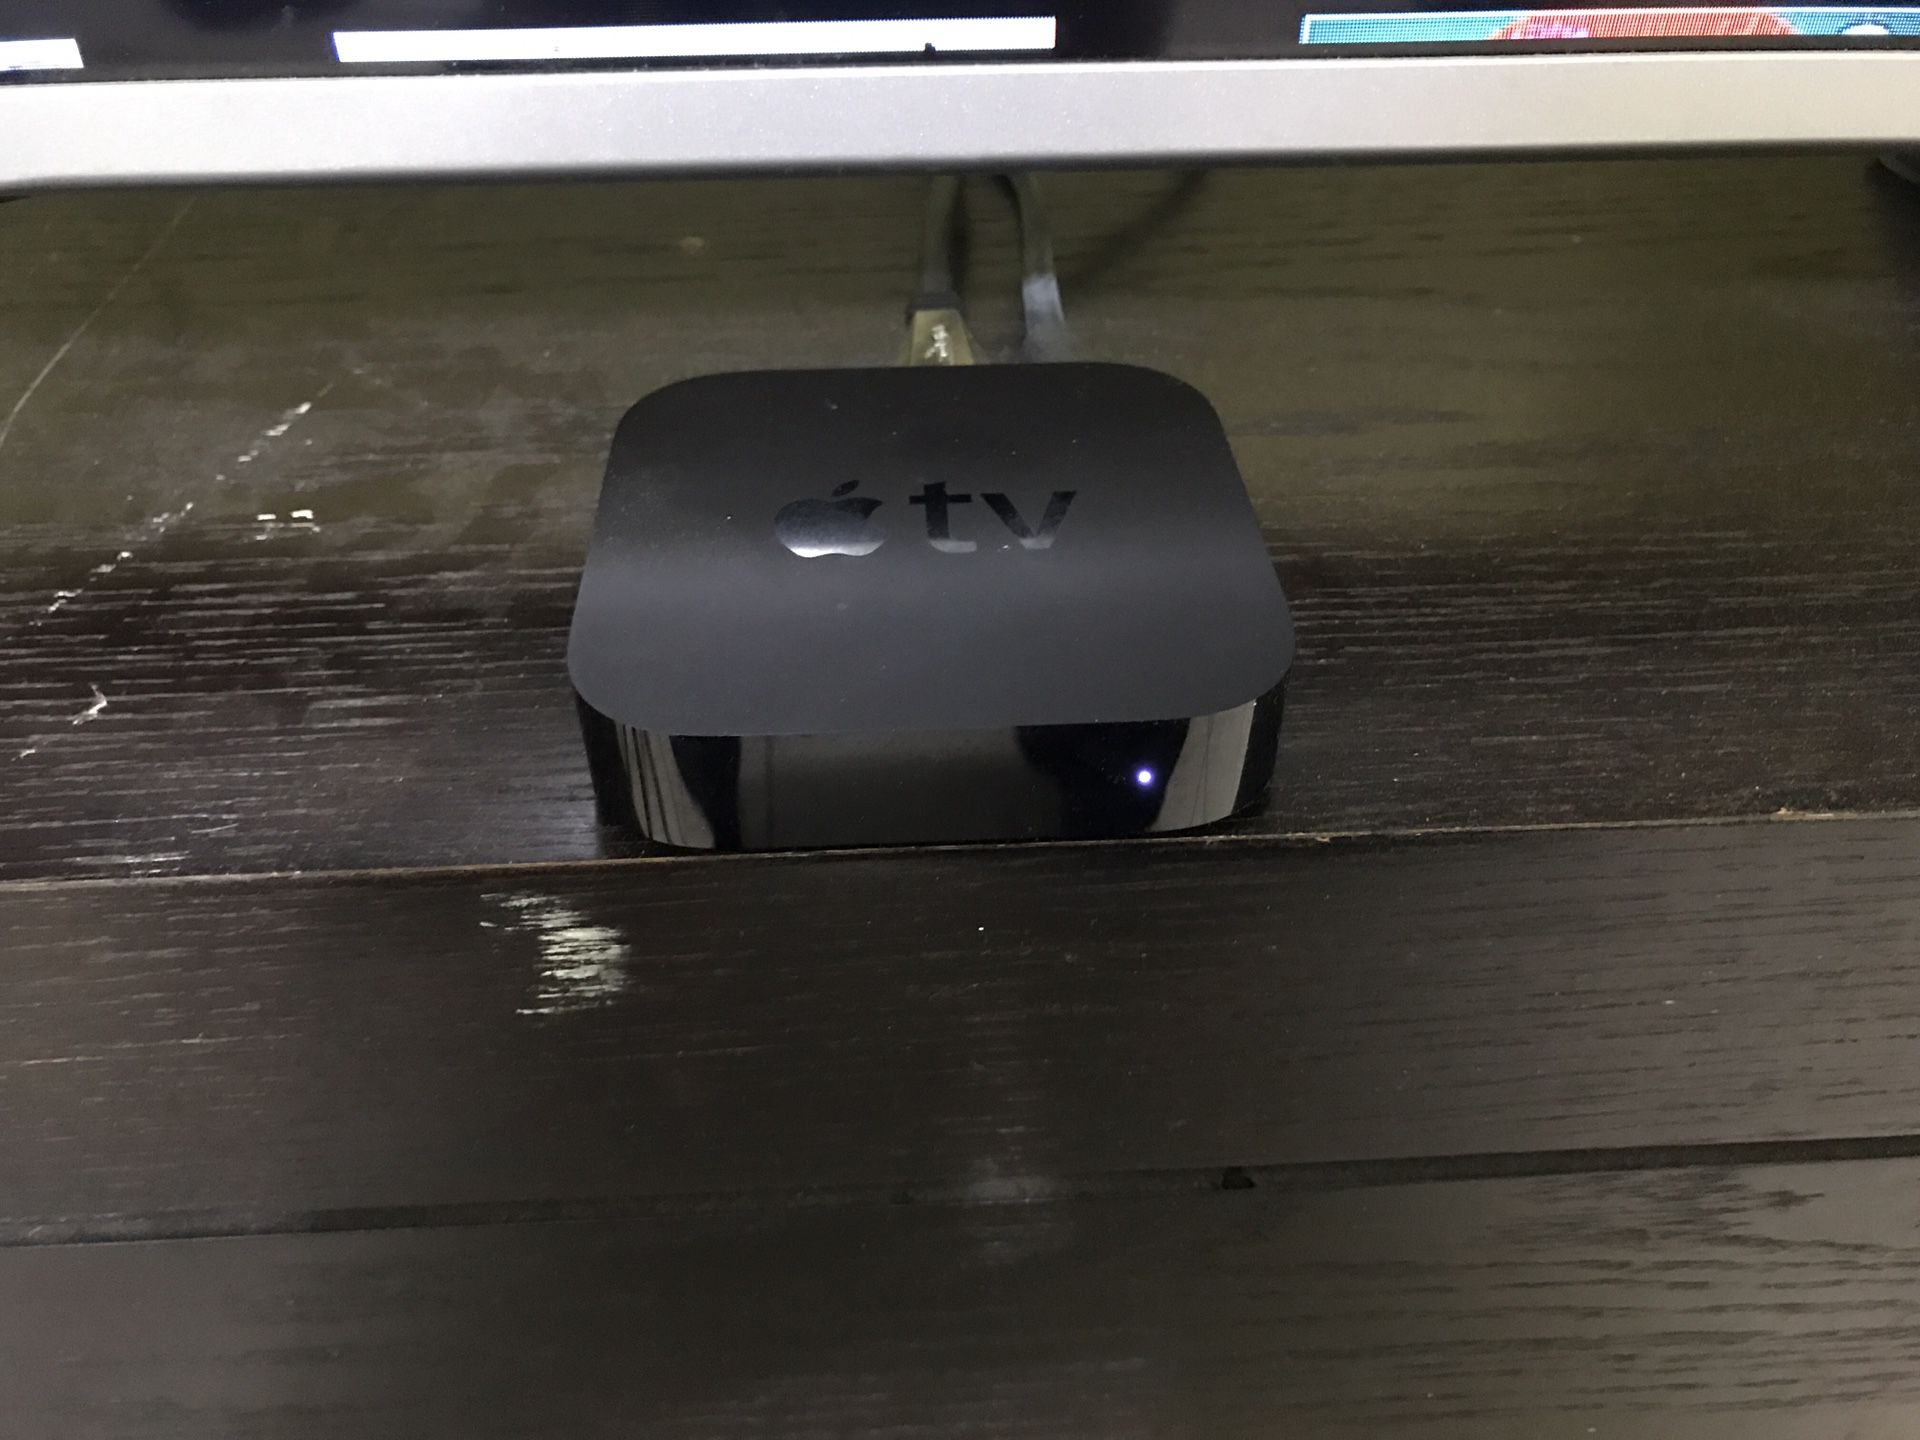 Apple TV (3rd Generation)